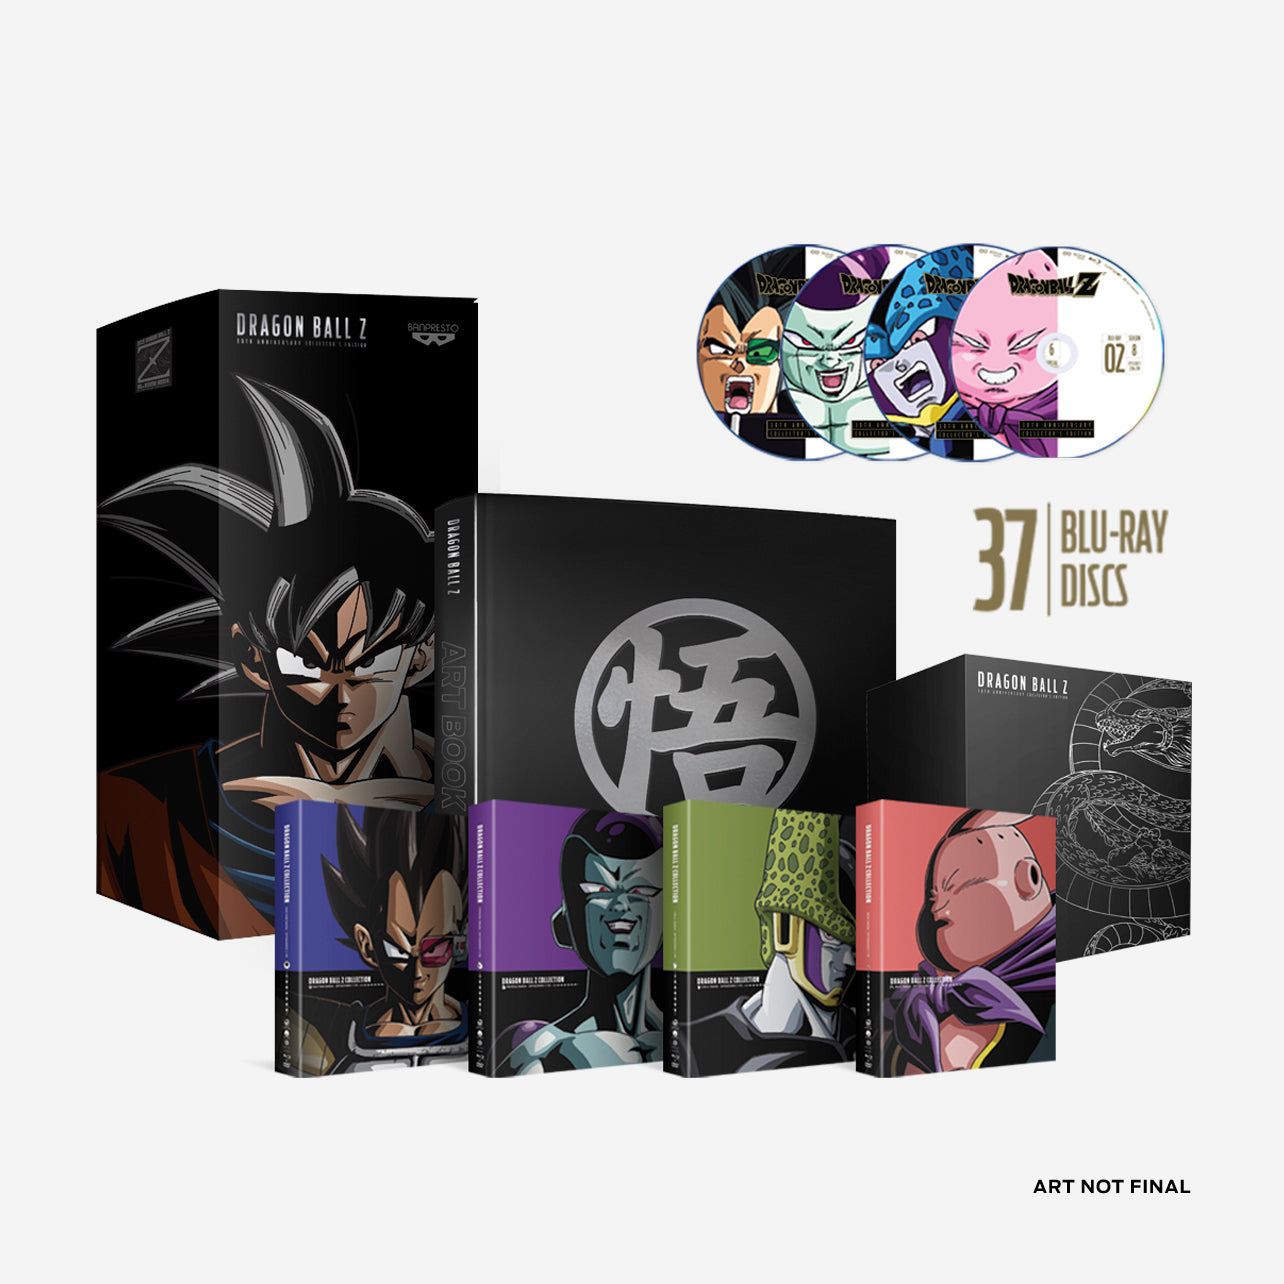 Dragon Ball Super: Super Hero Collector's Edition, Blu-ray, Free shipping  over £20